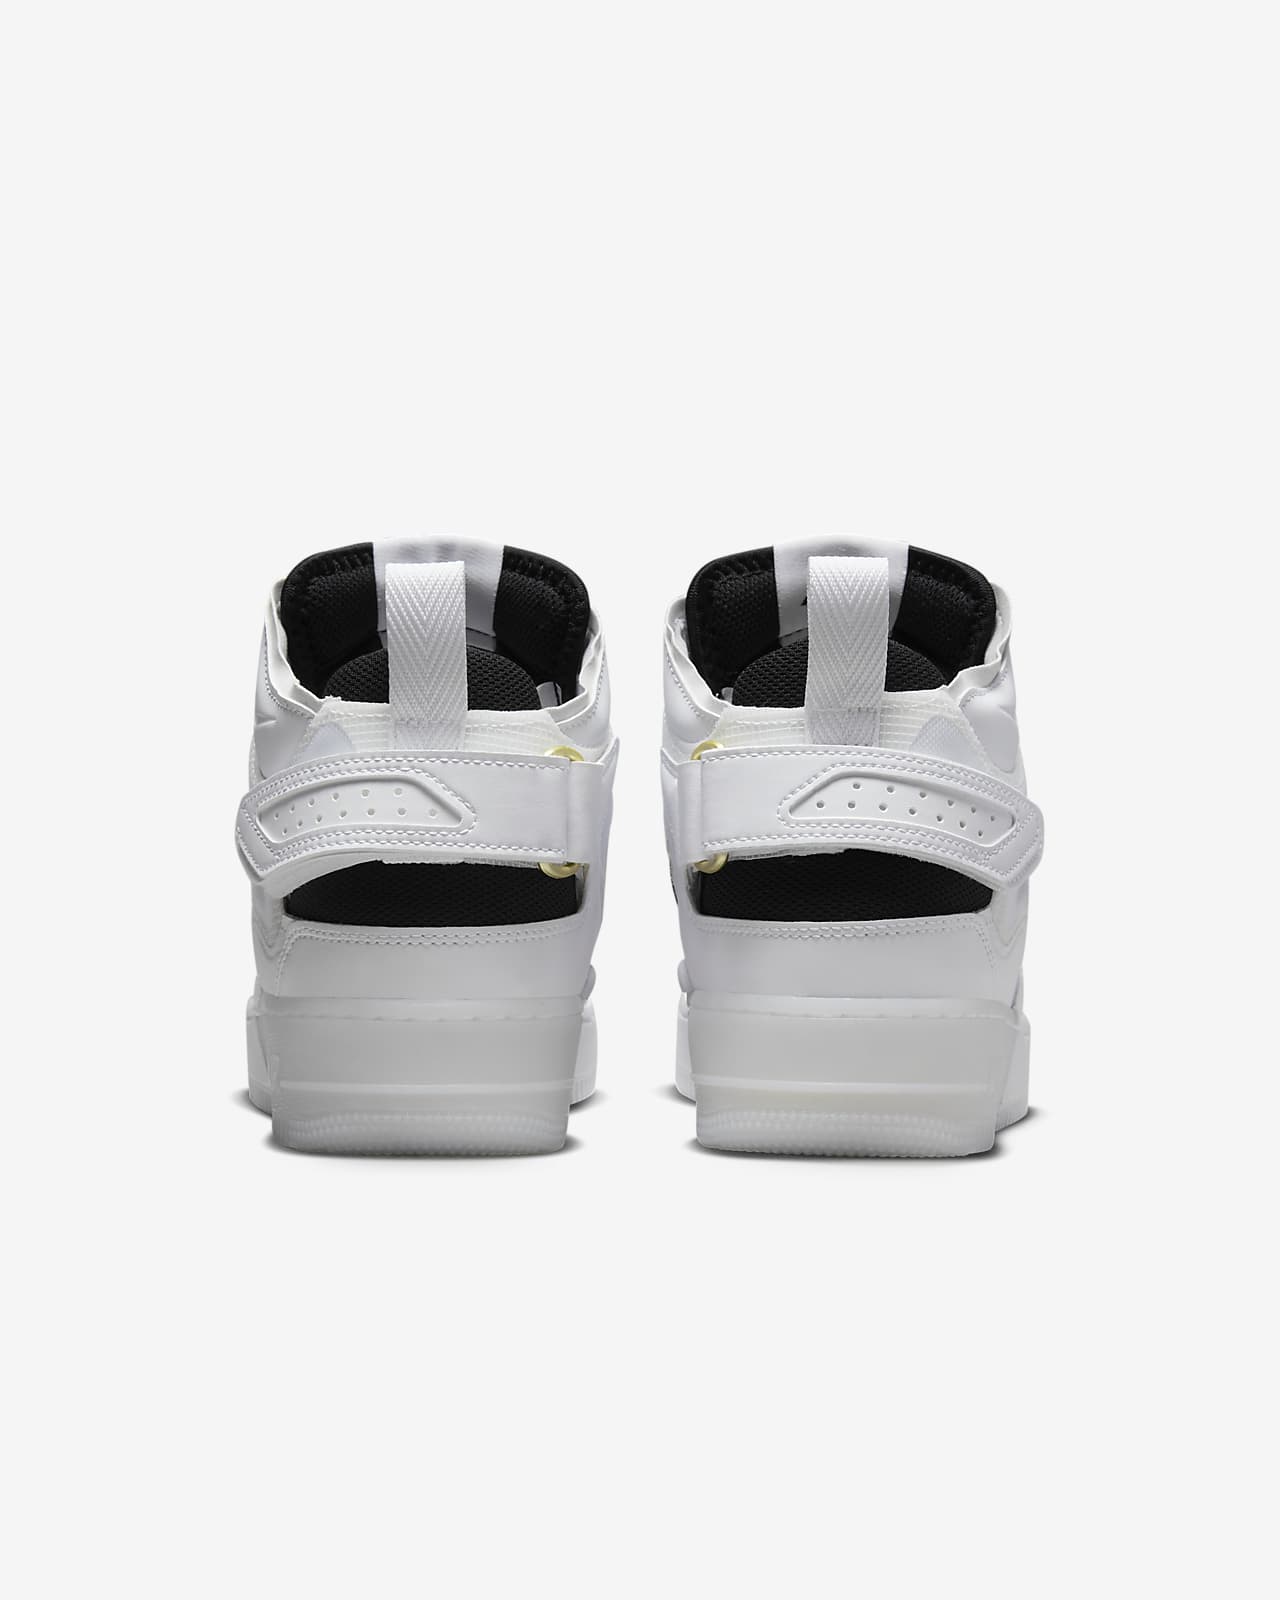 nike men's air force 1 react white sneaker